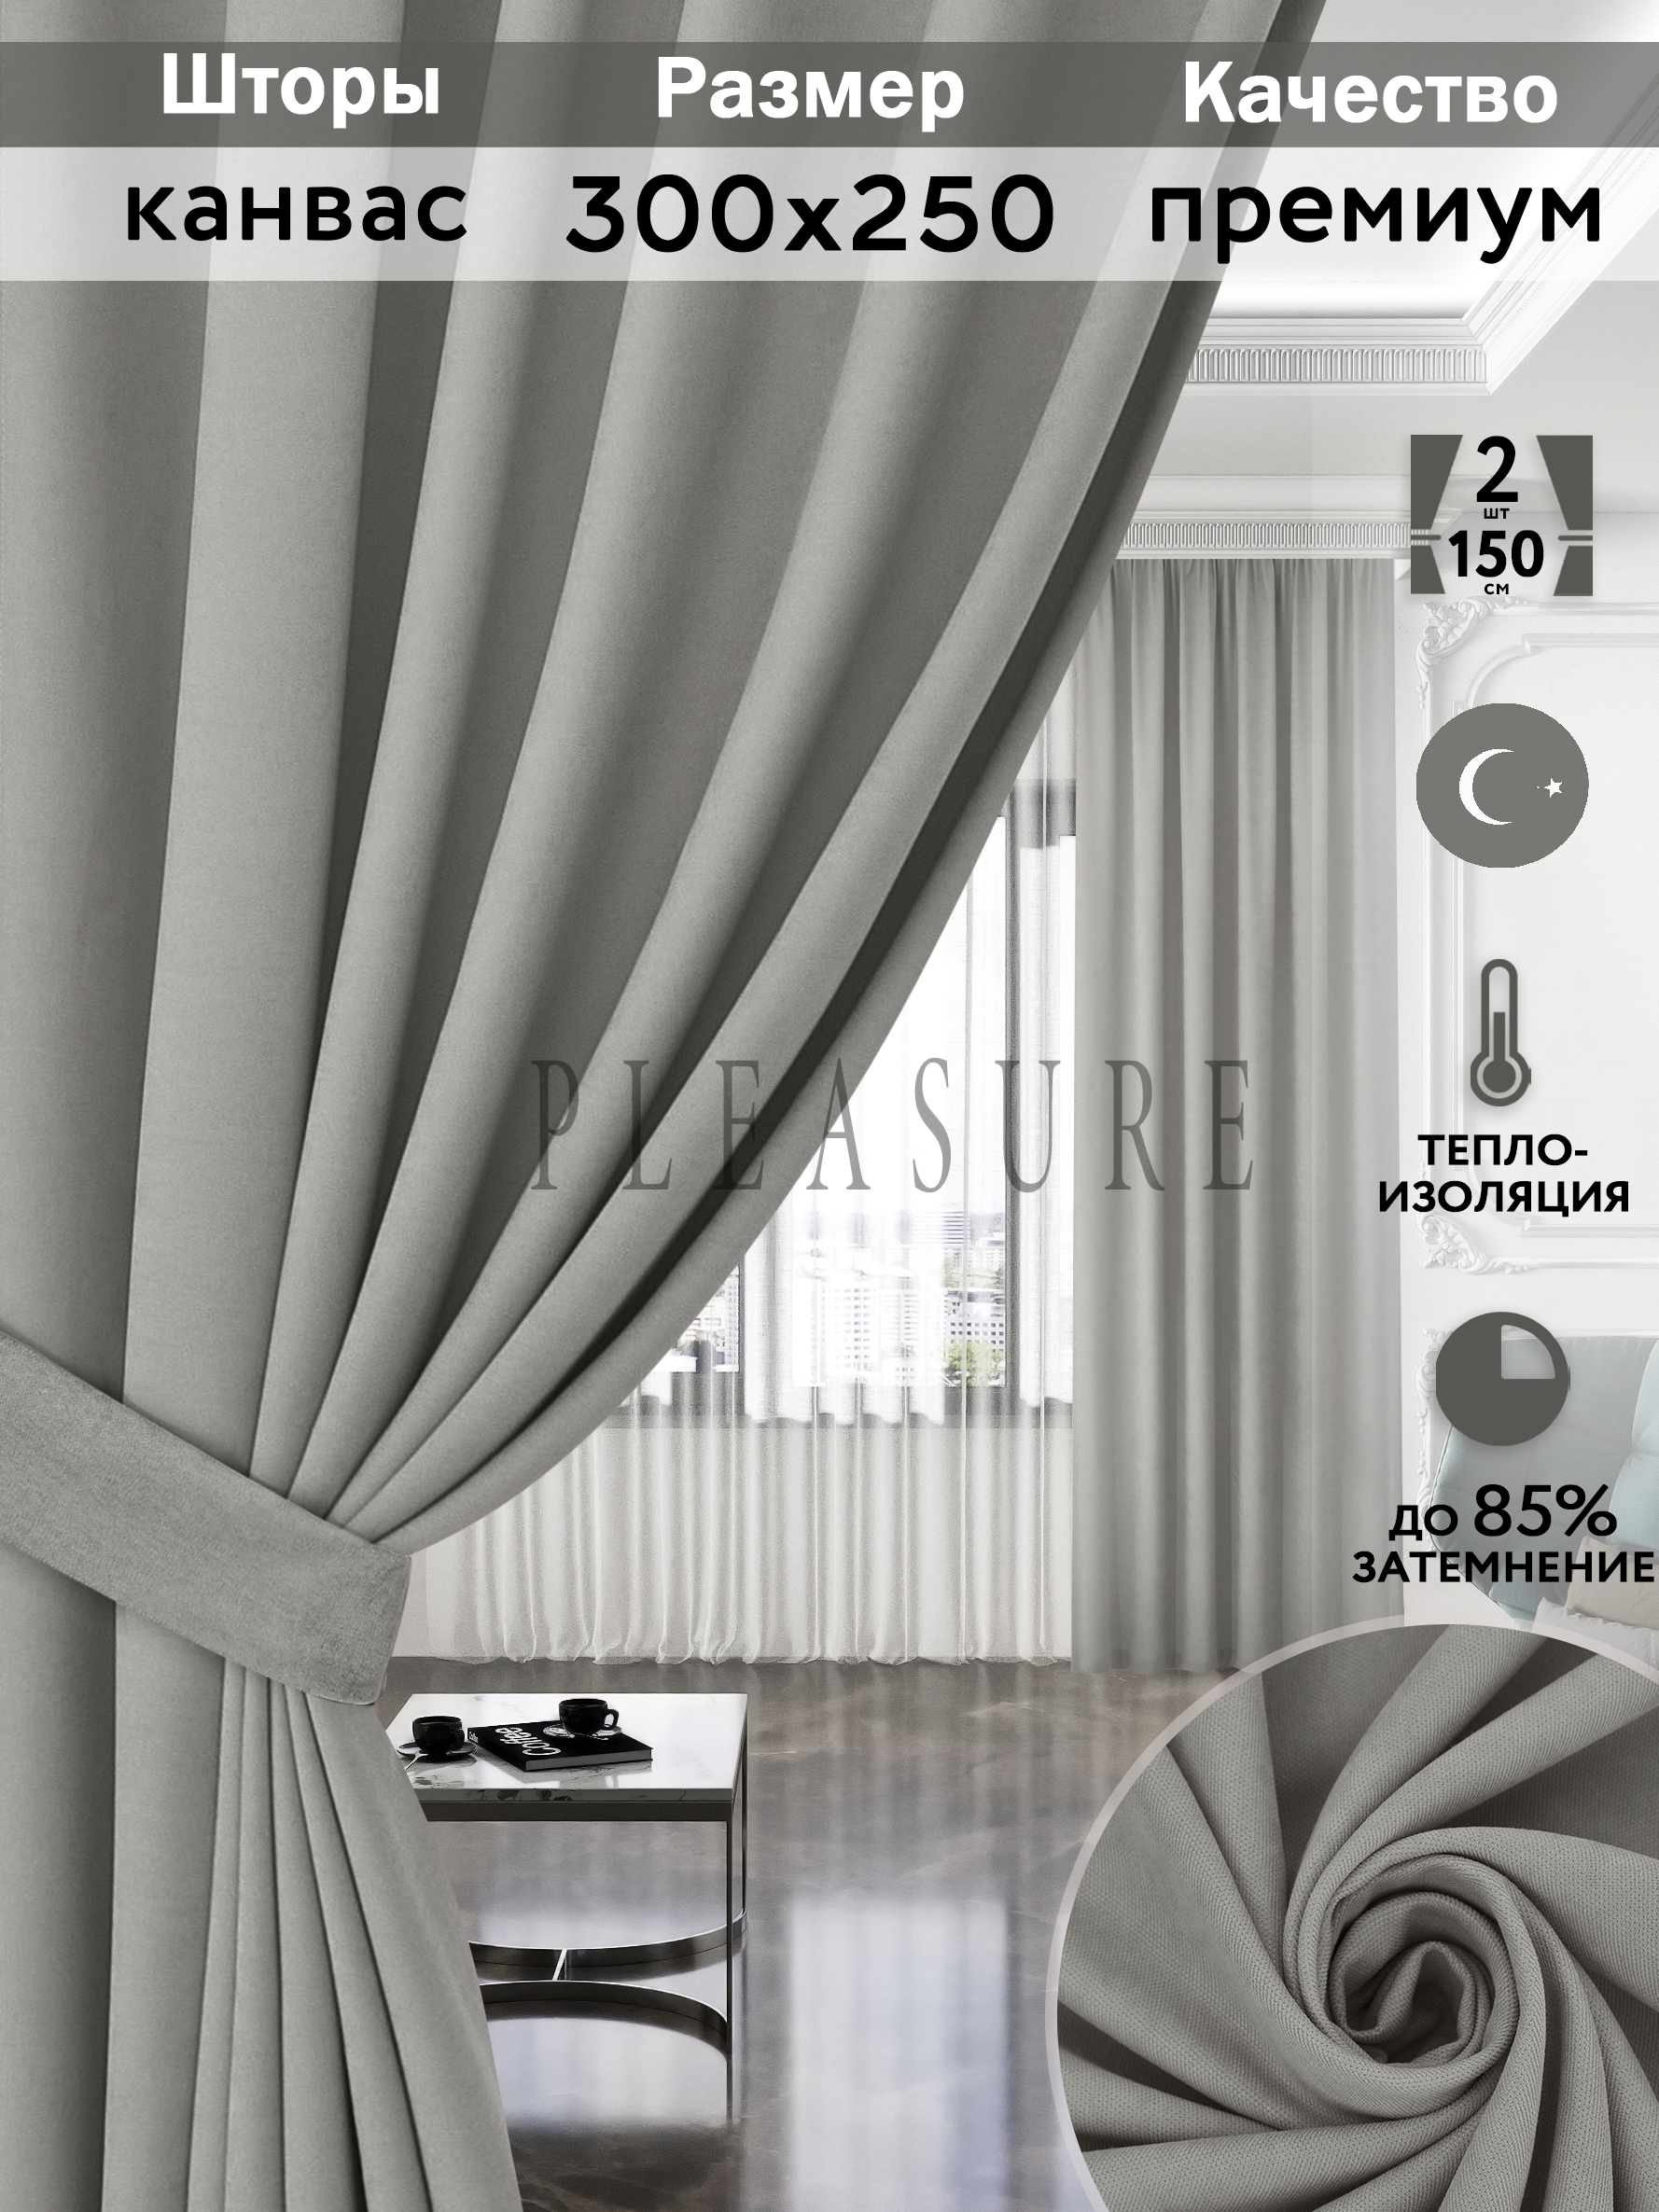 Комплект штор Pleasure Канвас 150х250 жемчужный серый 2шт